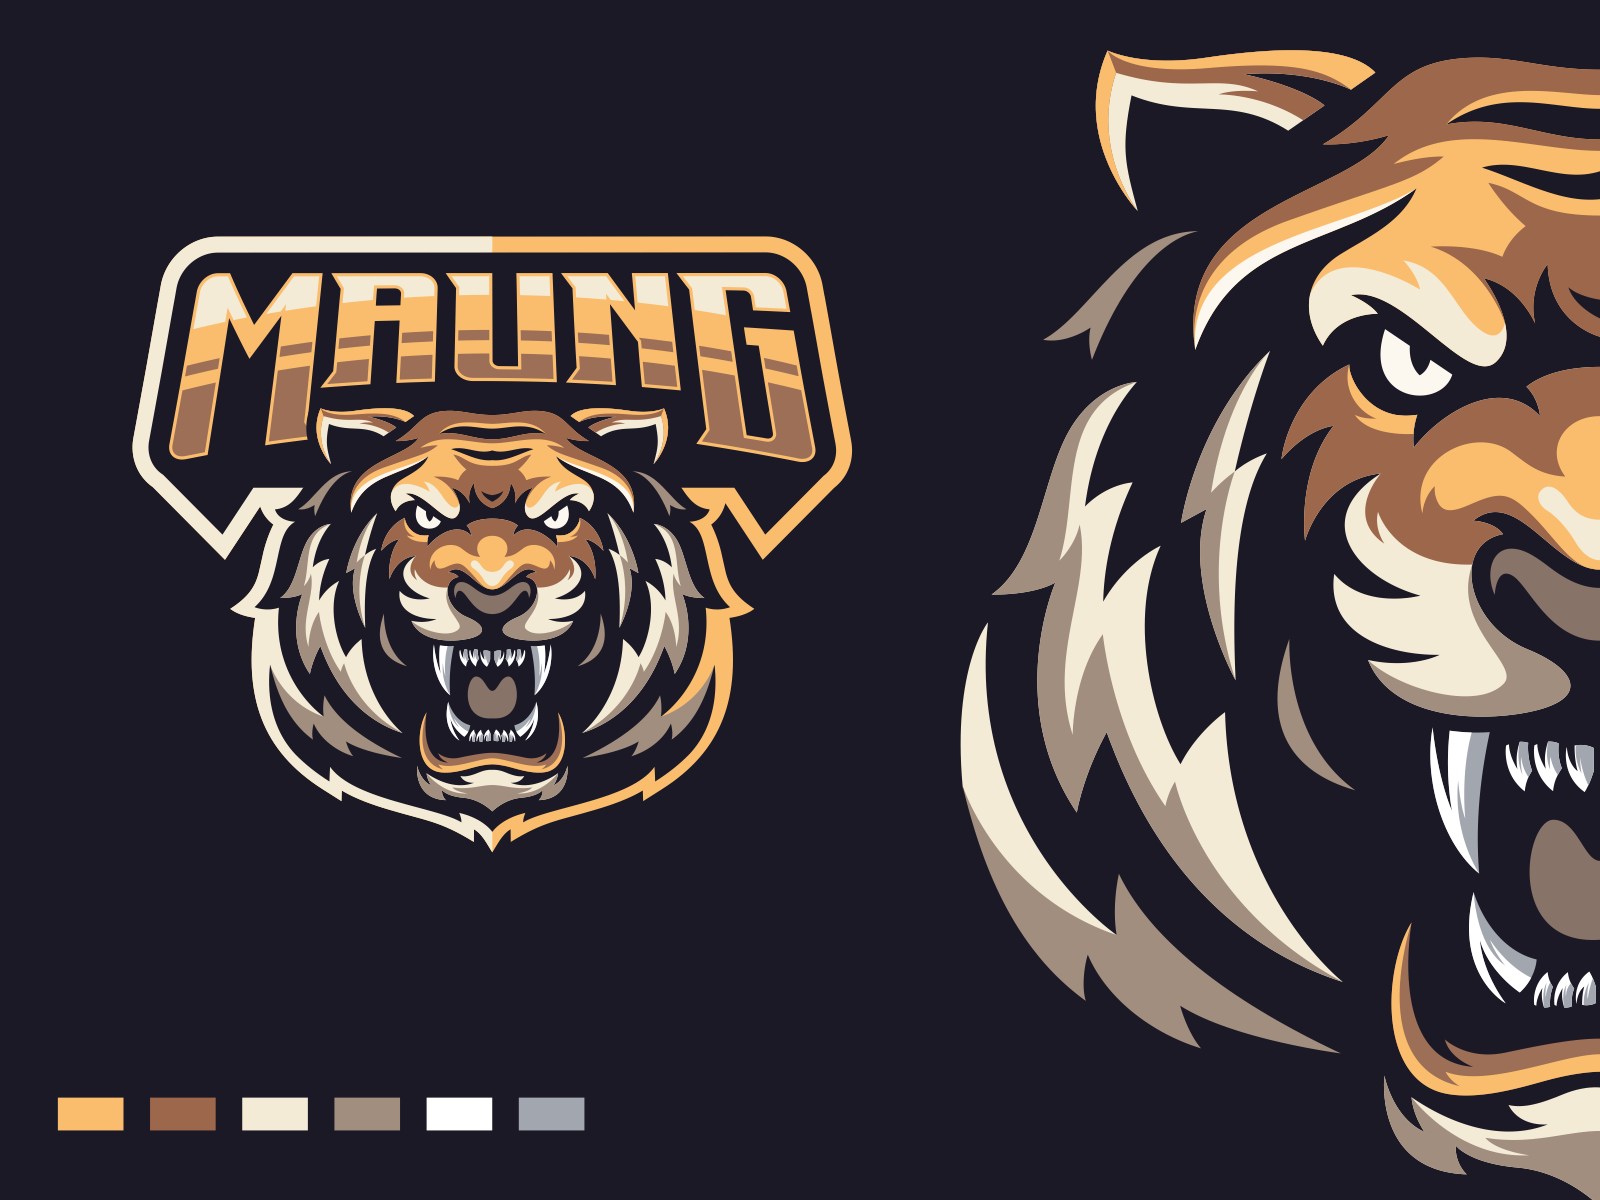 Tiger esport gaming logo design Royalty Free Vector Image